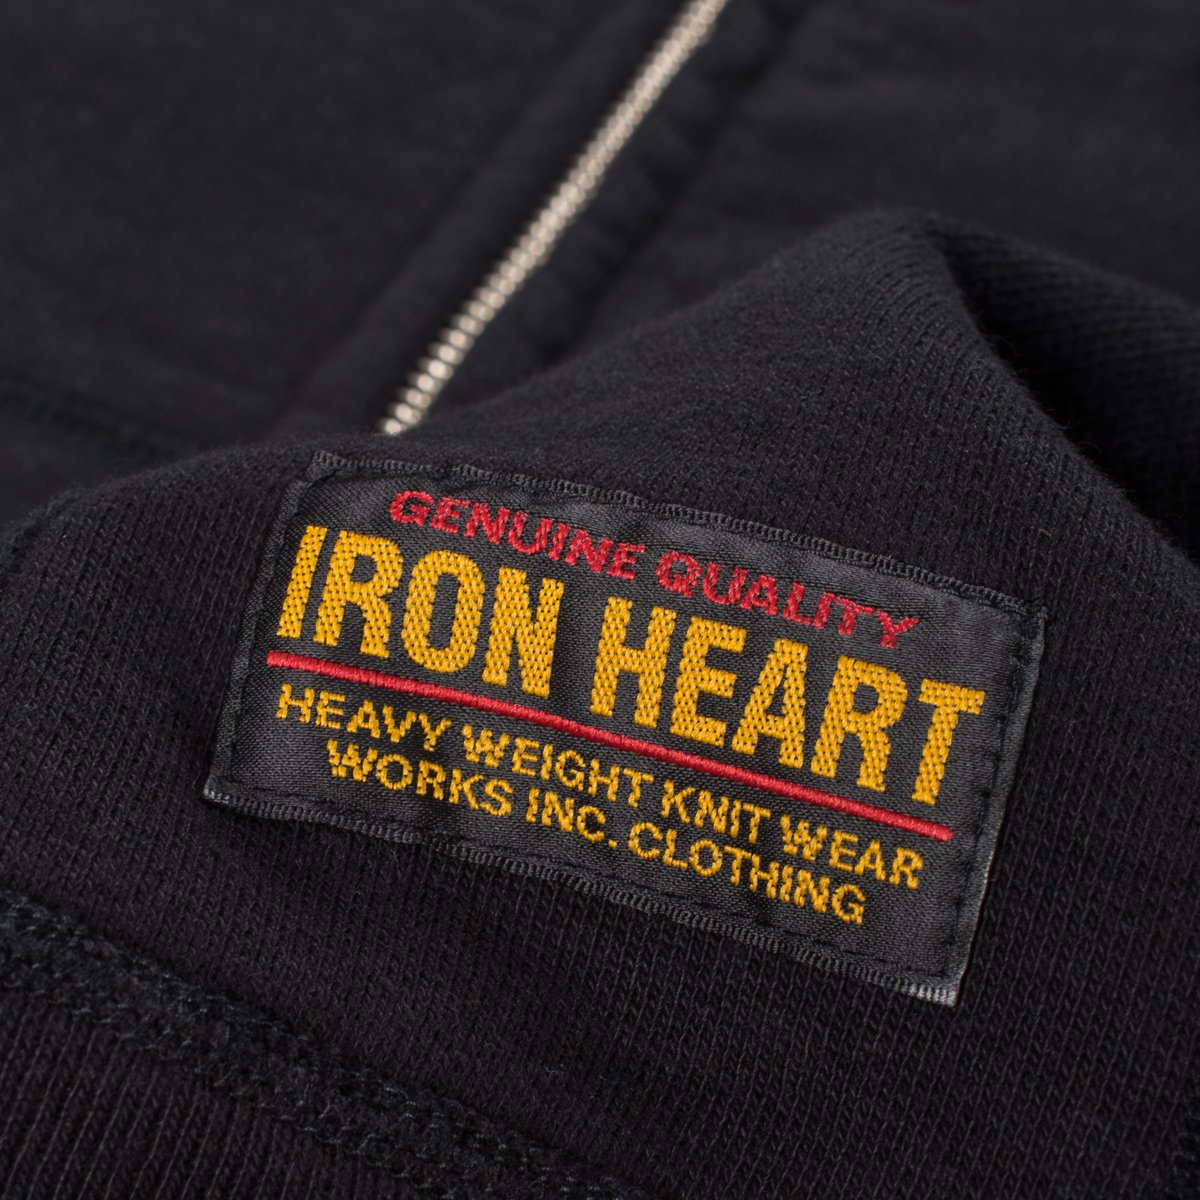 Iron Heart Ultra-Heavy Loopwheeled Hoodie - Zip-Up Black